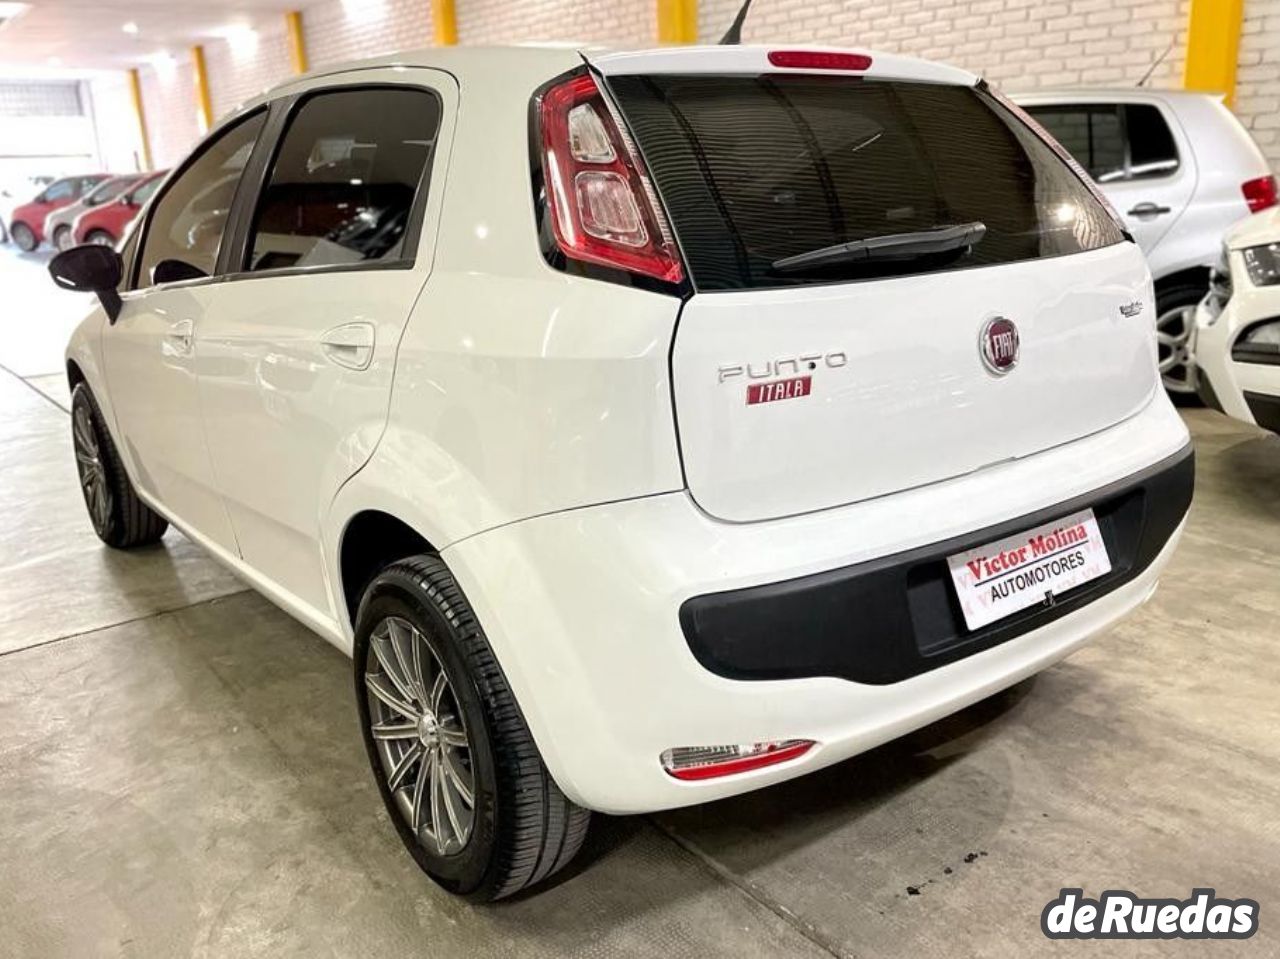 Fiat Punto Usado en San Juan, deRuedas